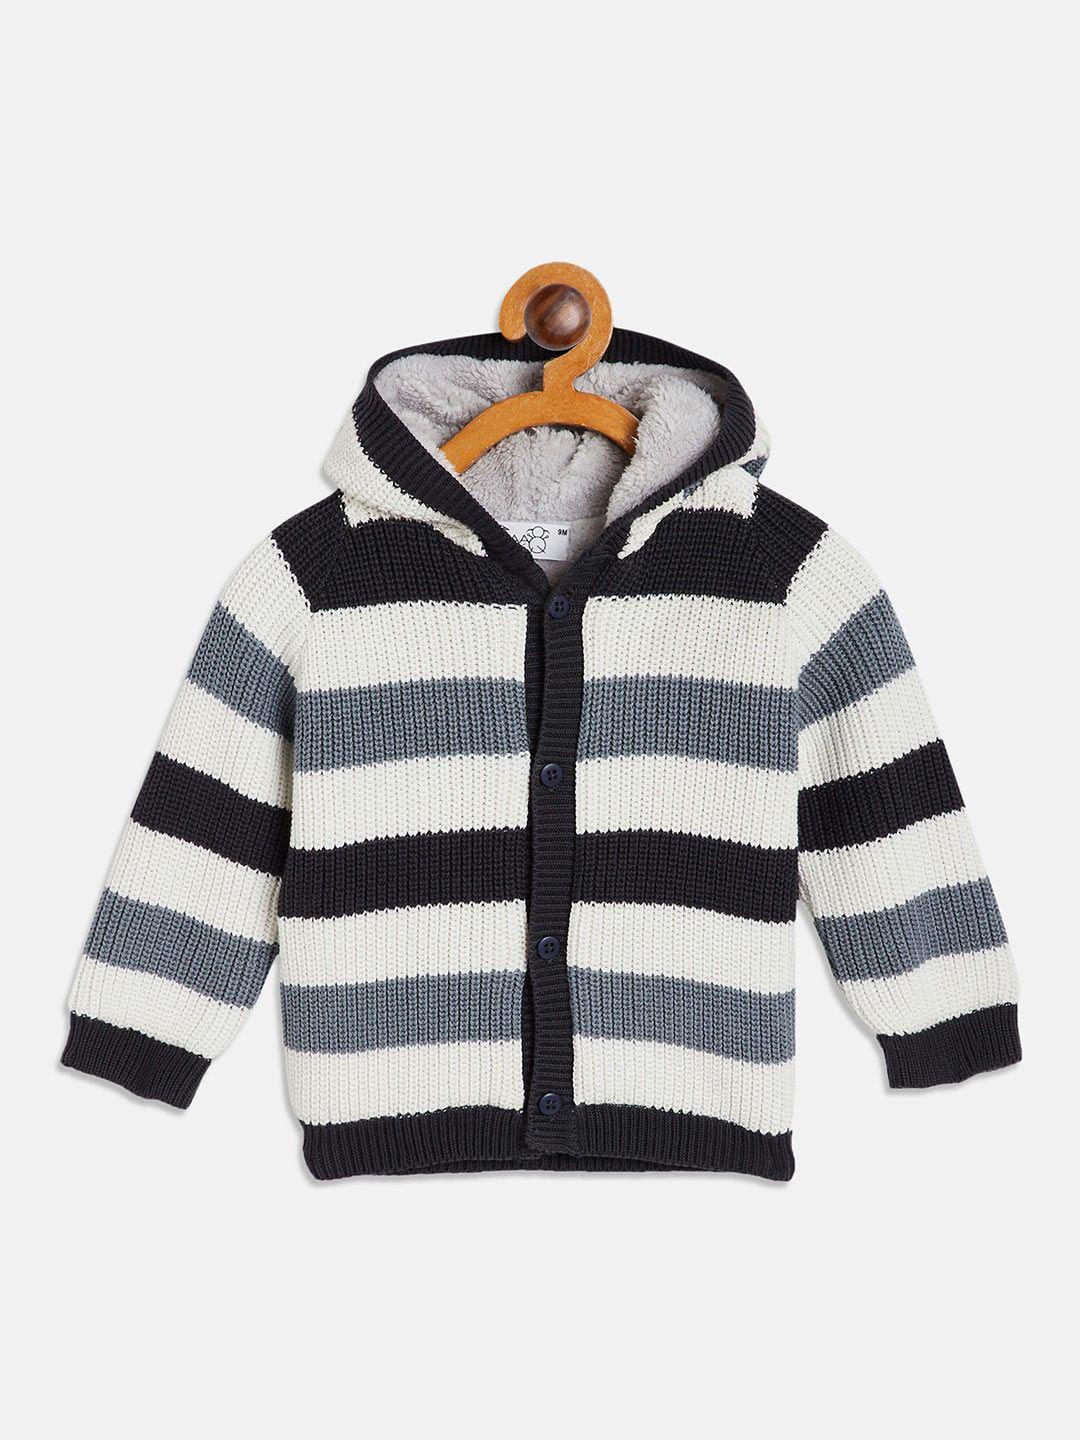 wildlinggs infants striped pure cotton cardigan sweater